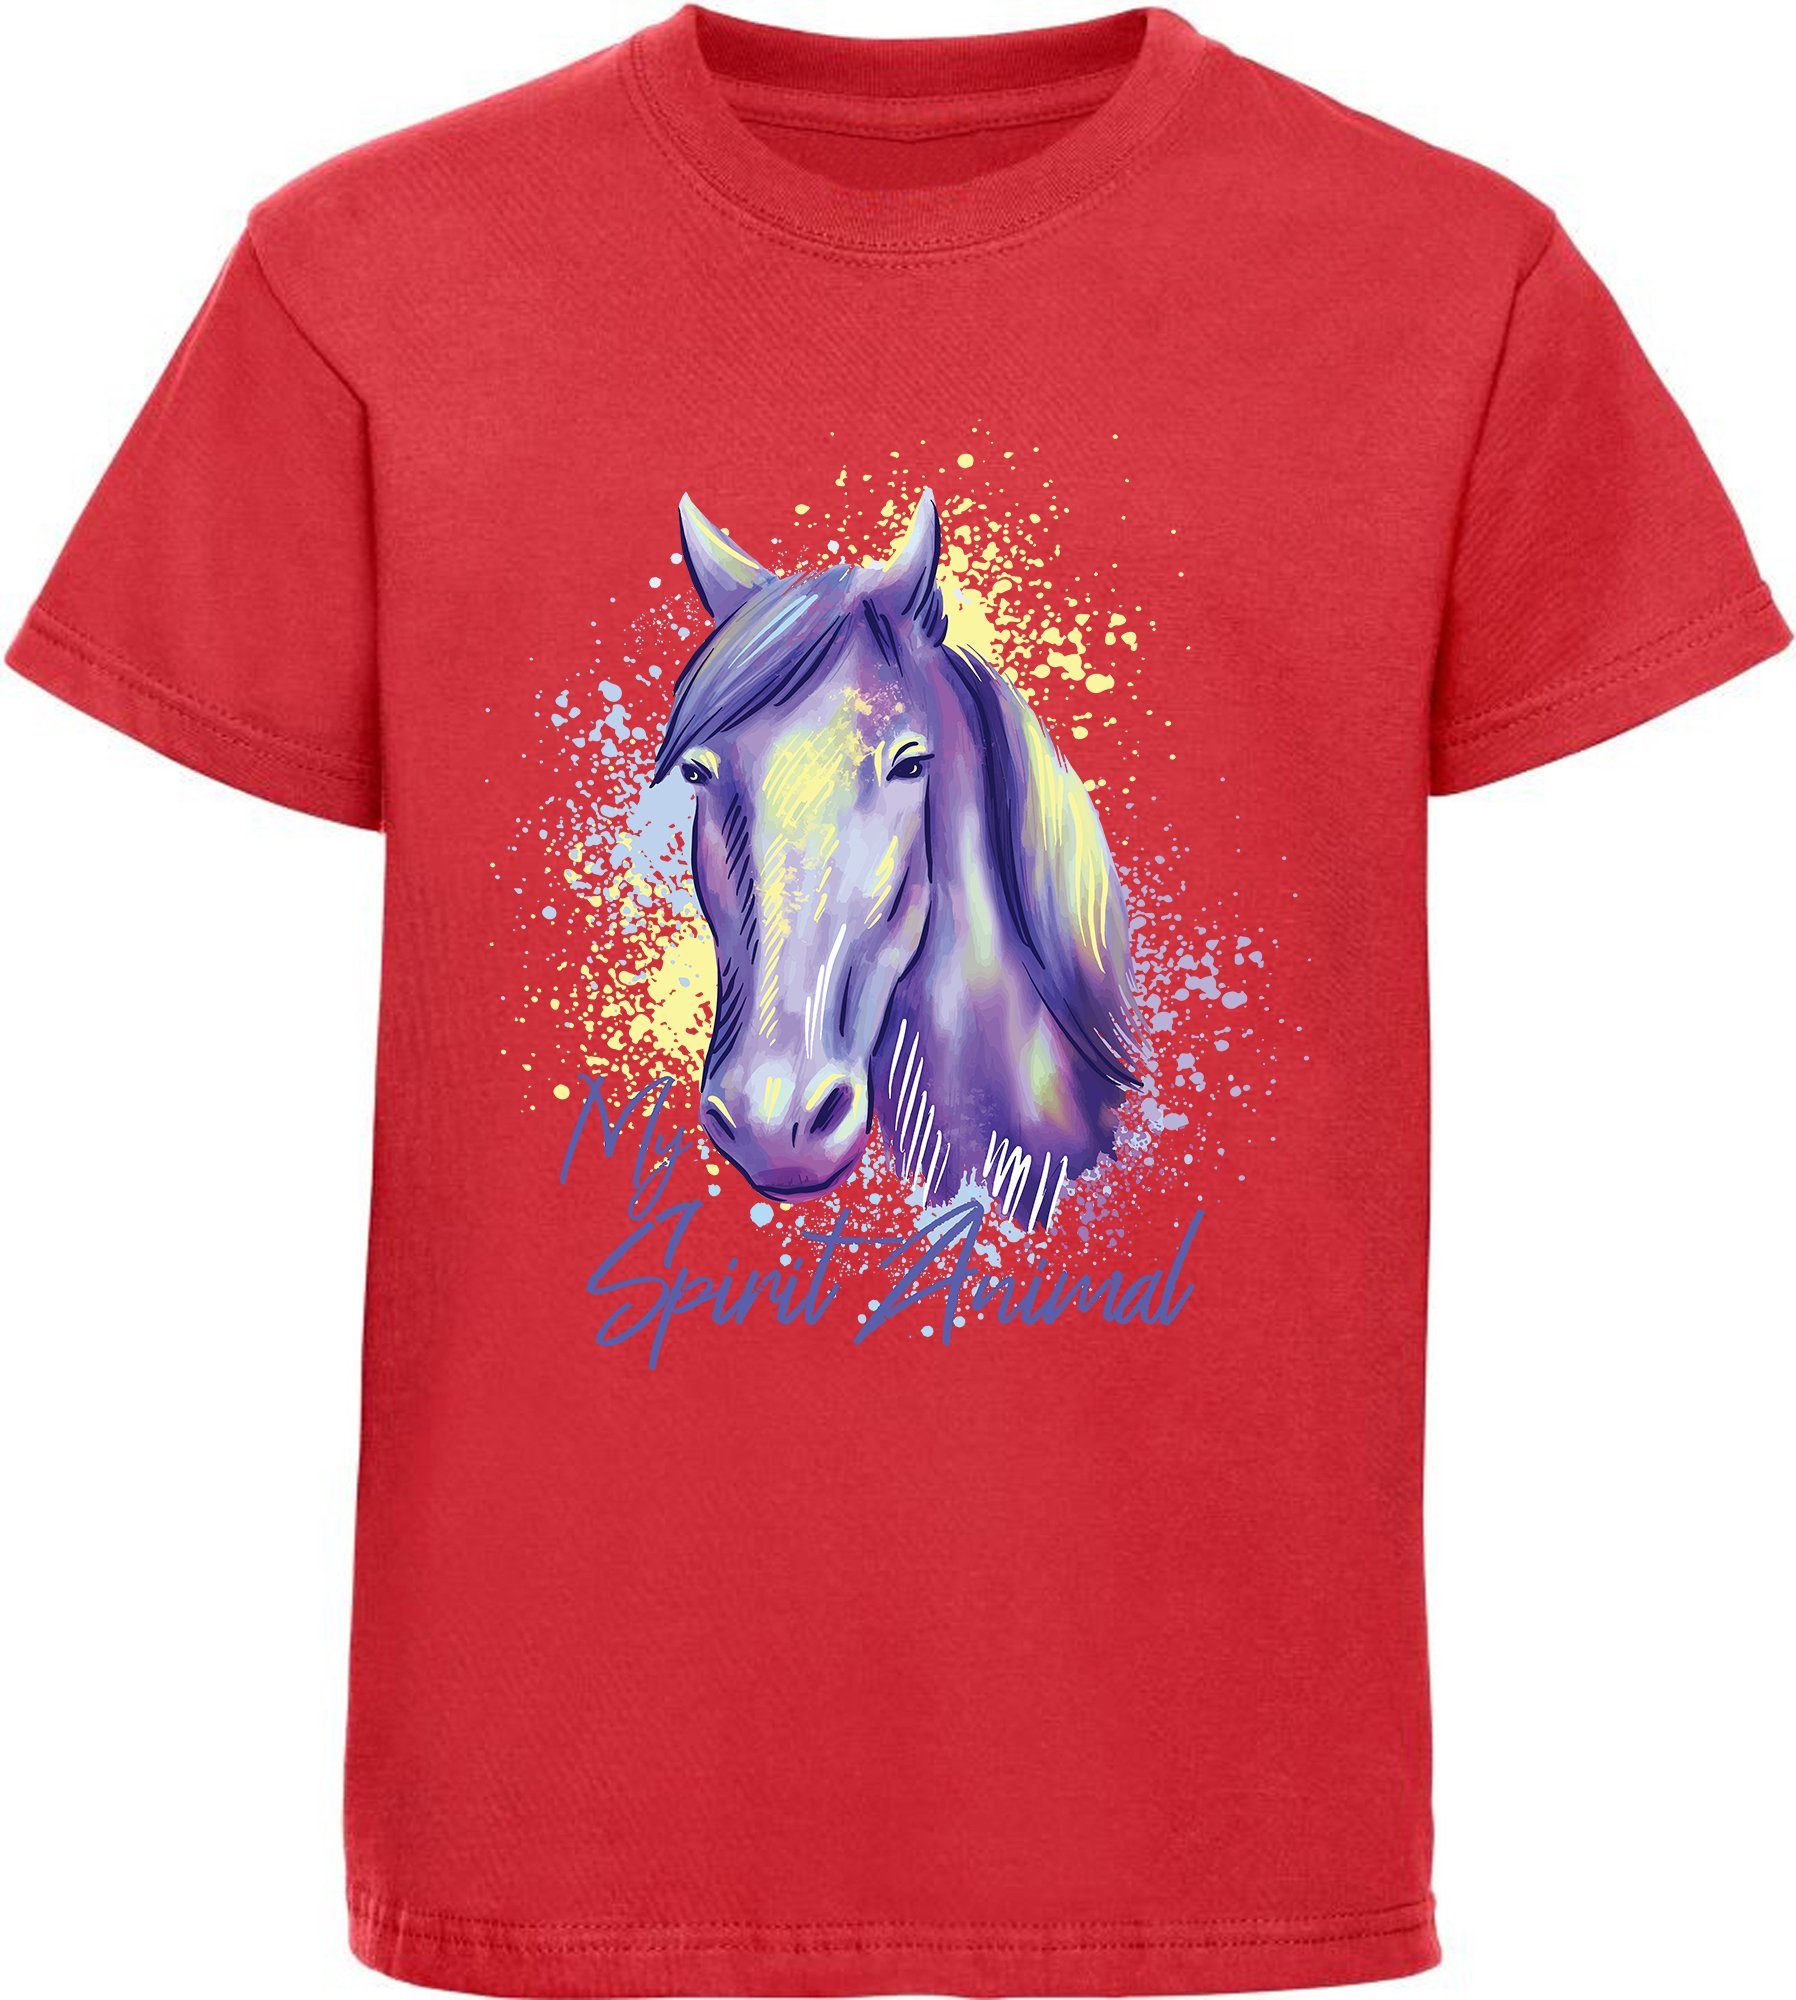 MyDesign24 Print-Shirt bedrucktes Mädchen Aufdruck, rot Pferdekopf T-Shirt i158 mit Baumwollshirt gemalter